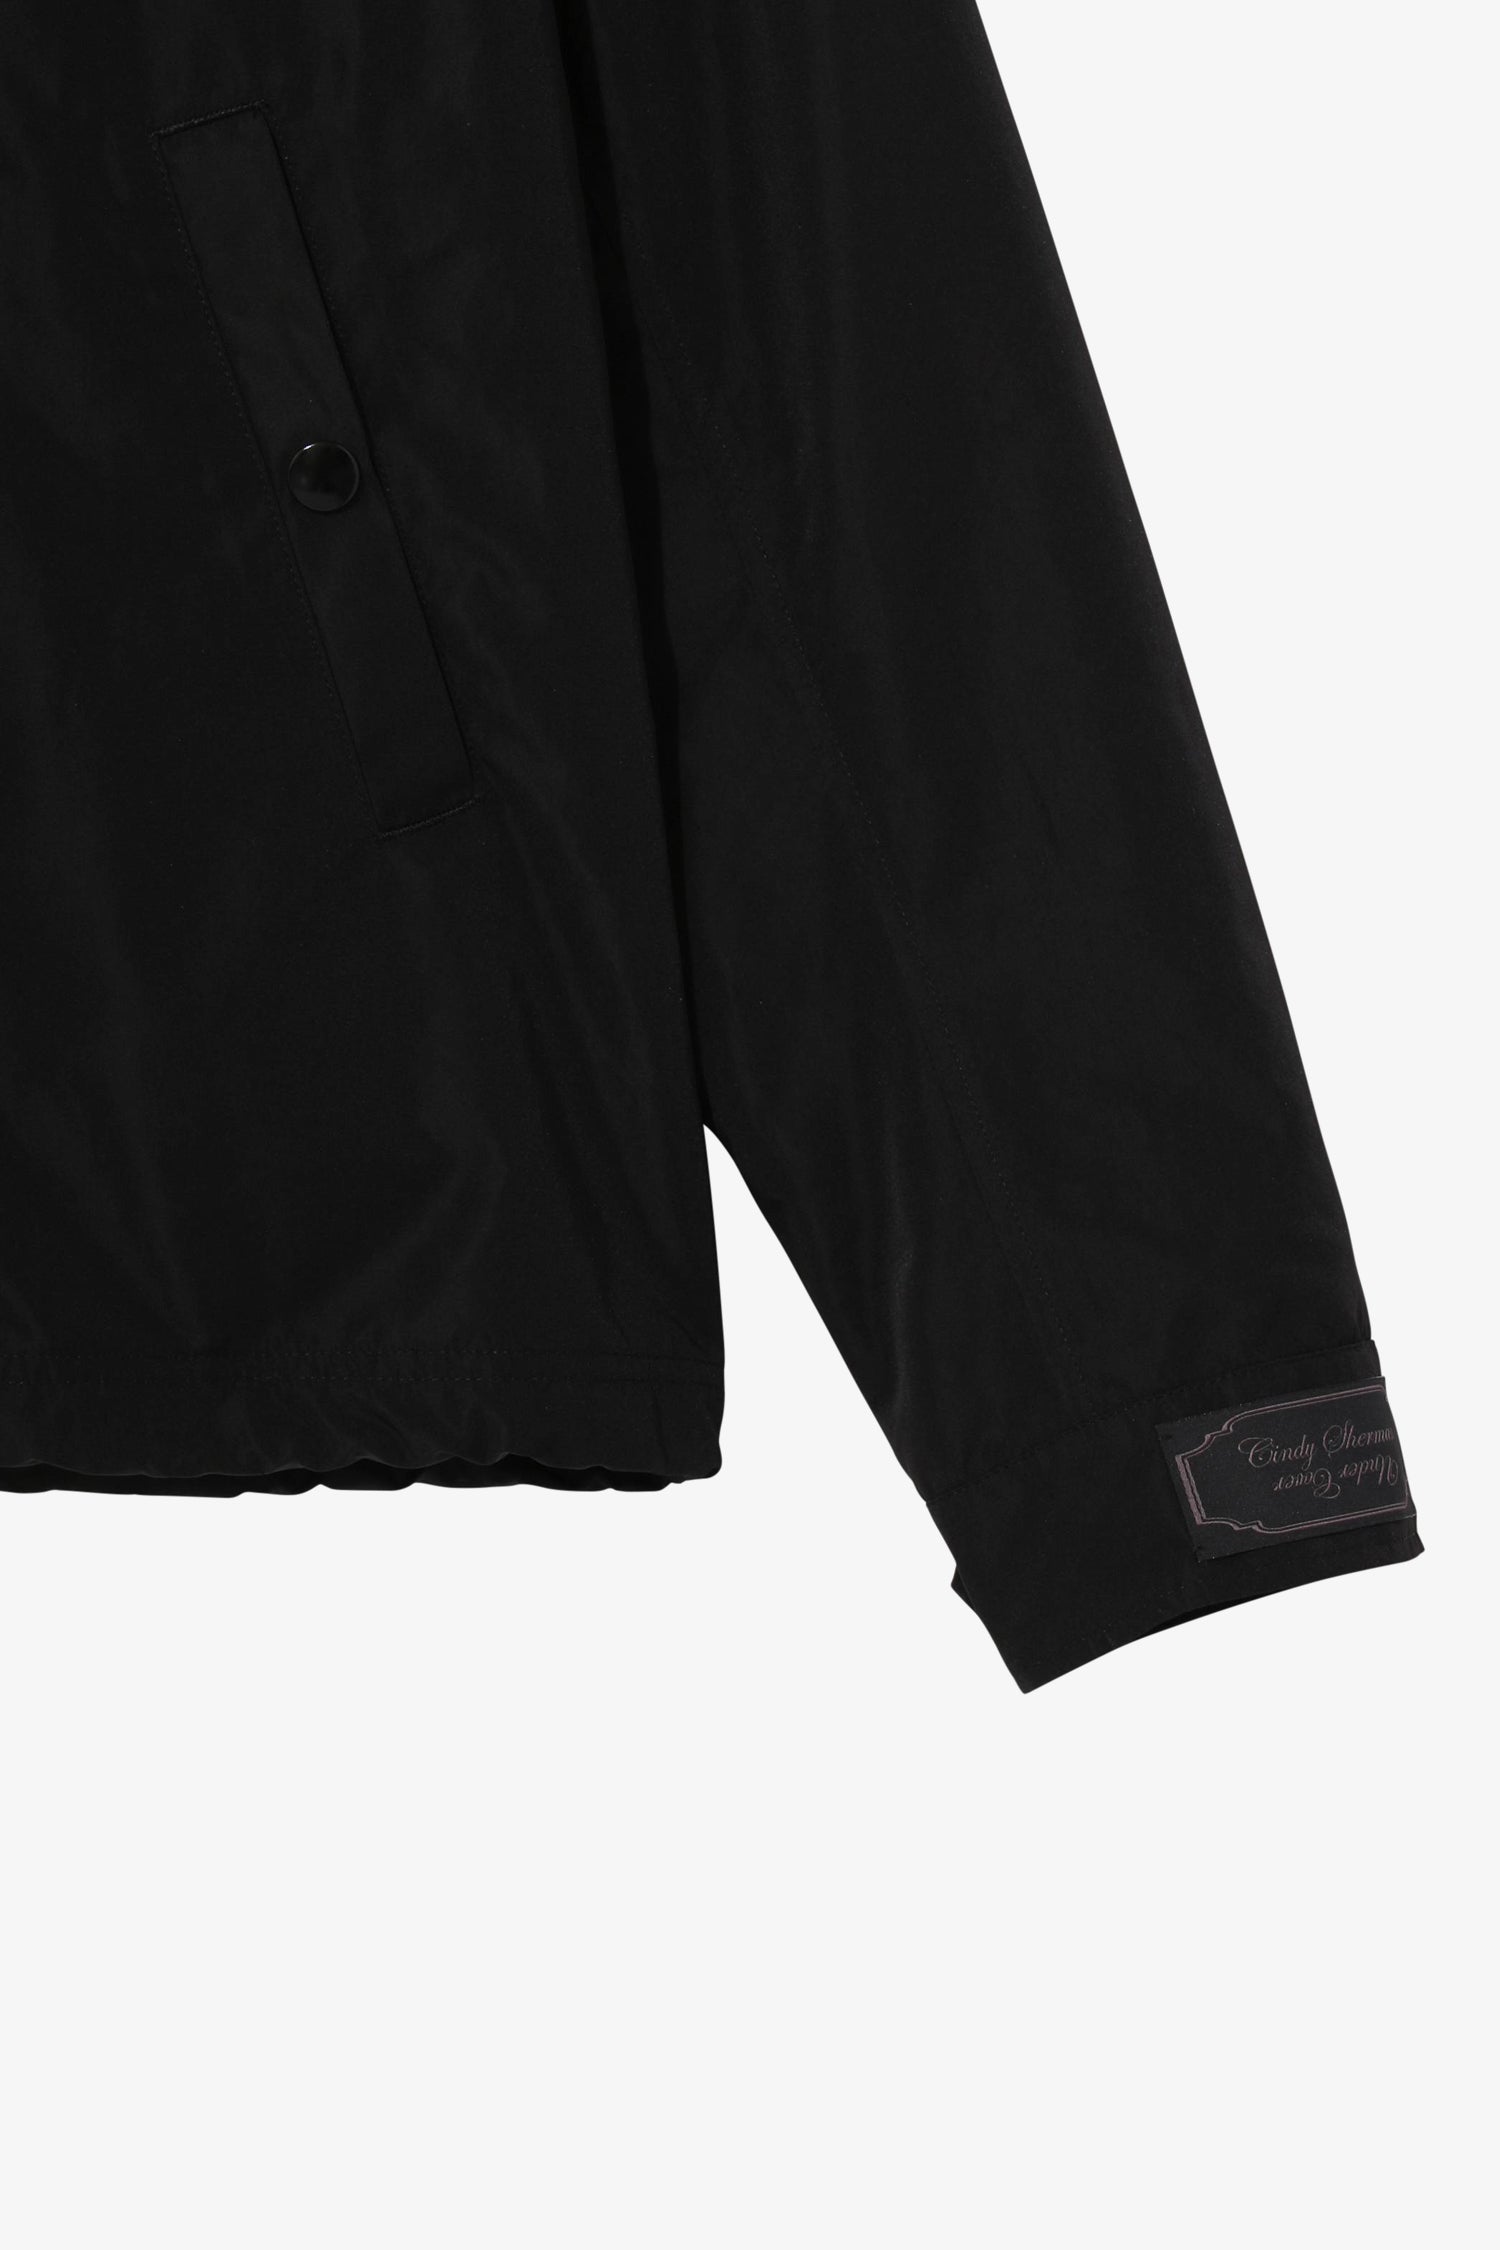 Selectshop FRAME - UNDERCOVER Cindy Sherman Coach Jacket Outerwear Dubai